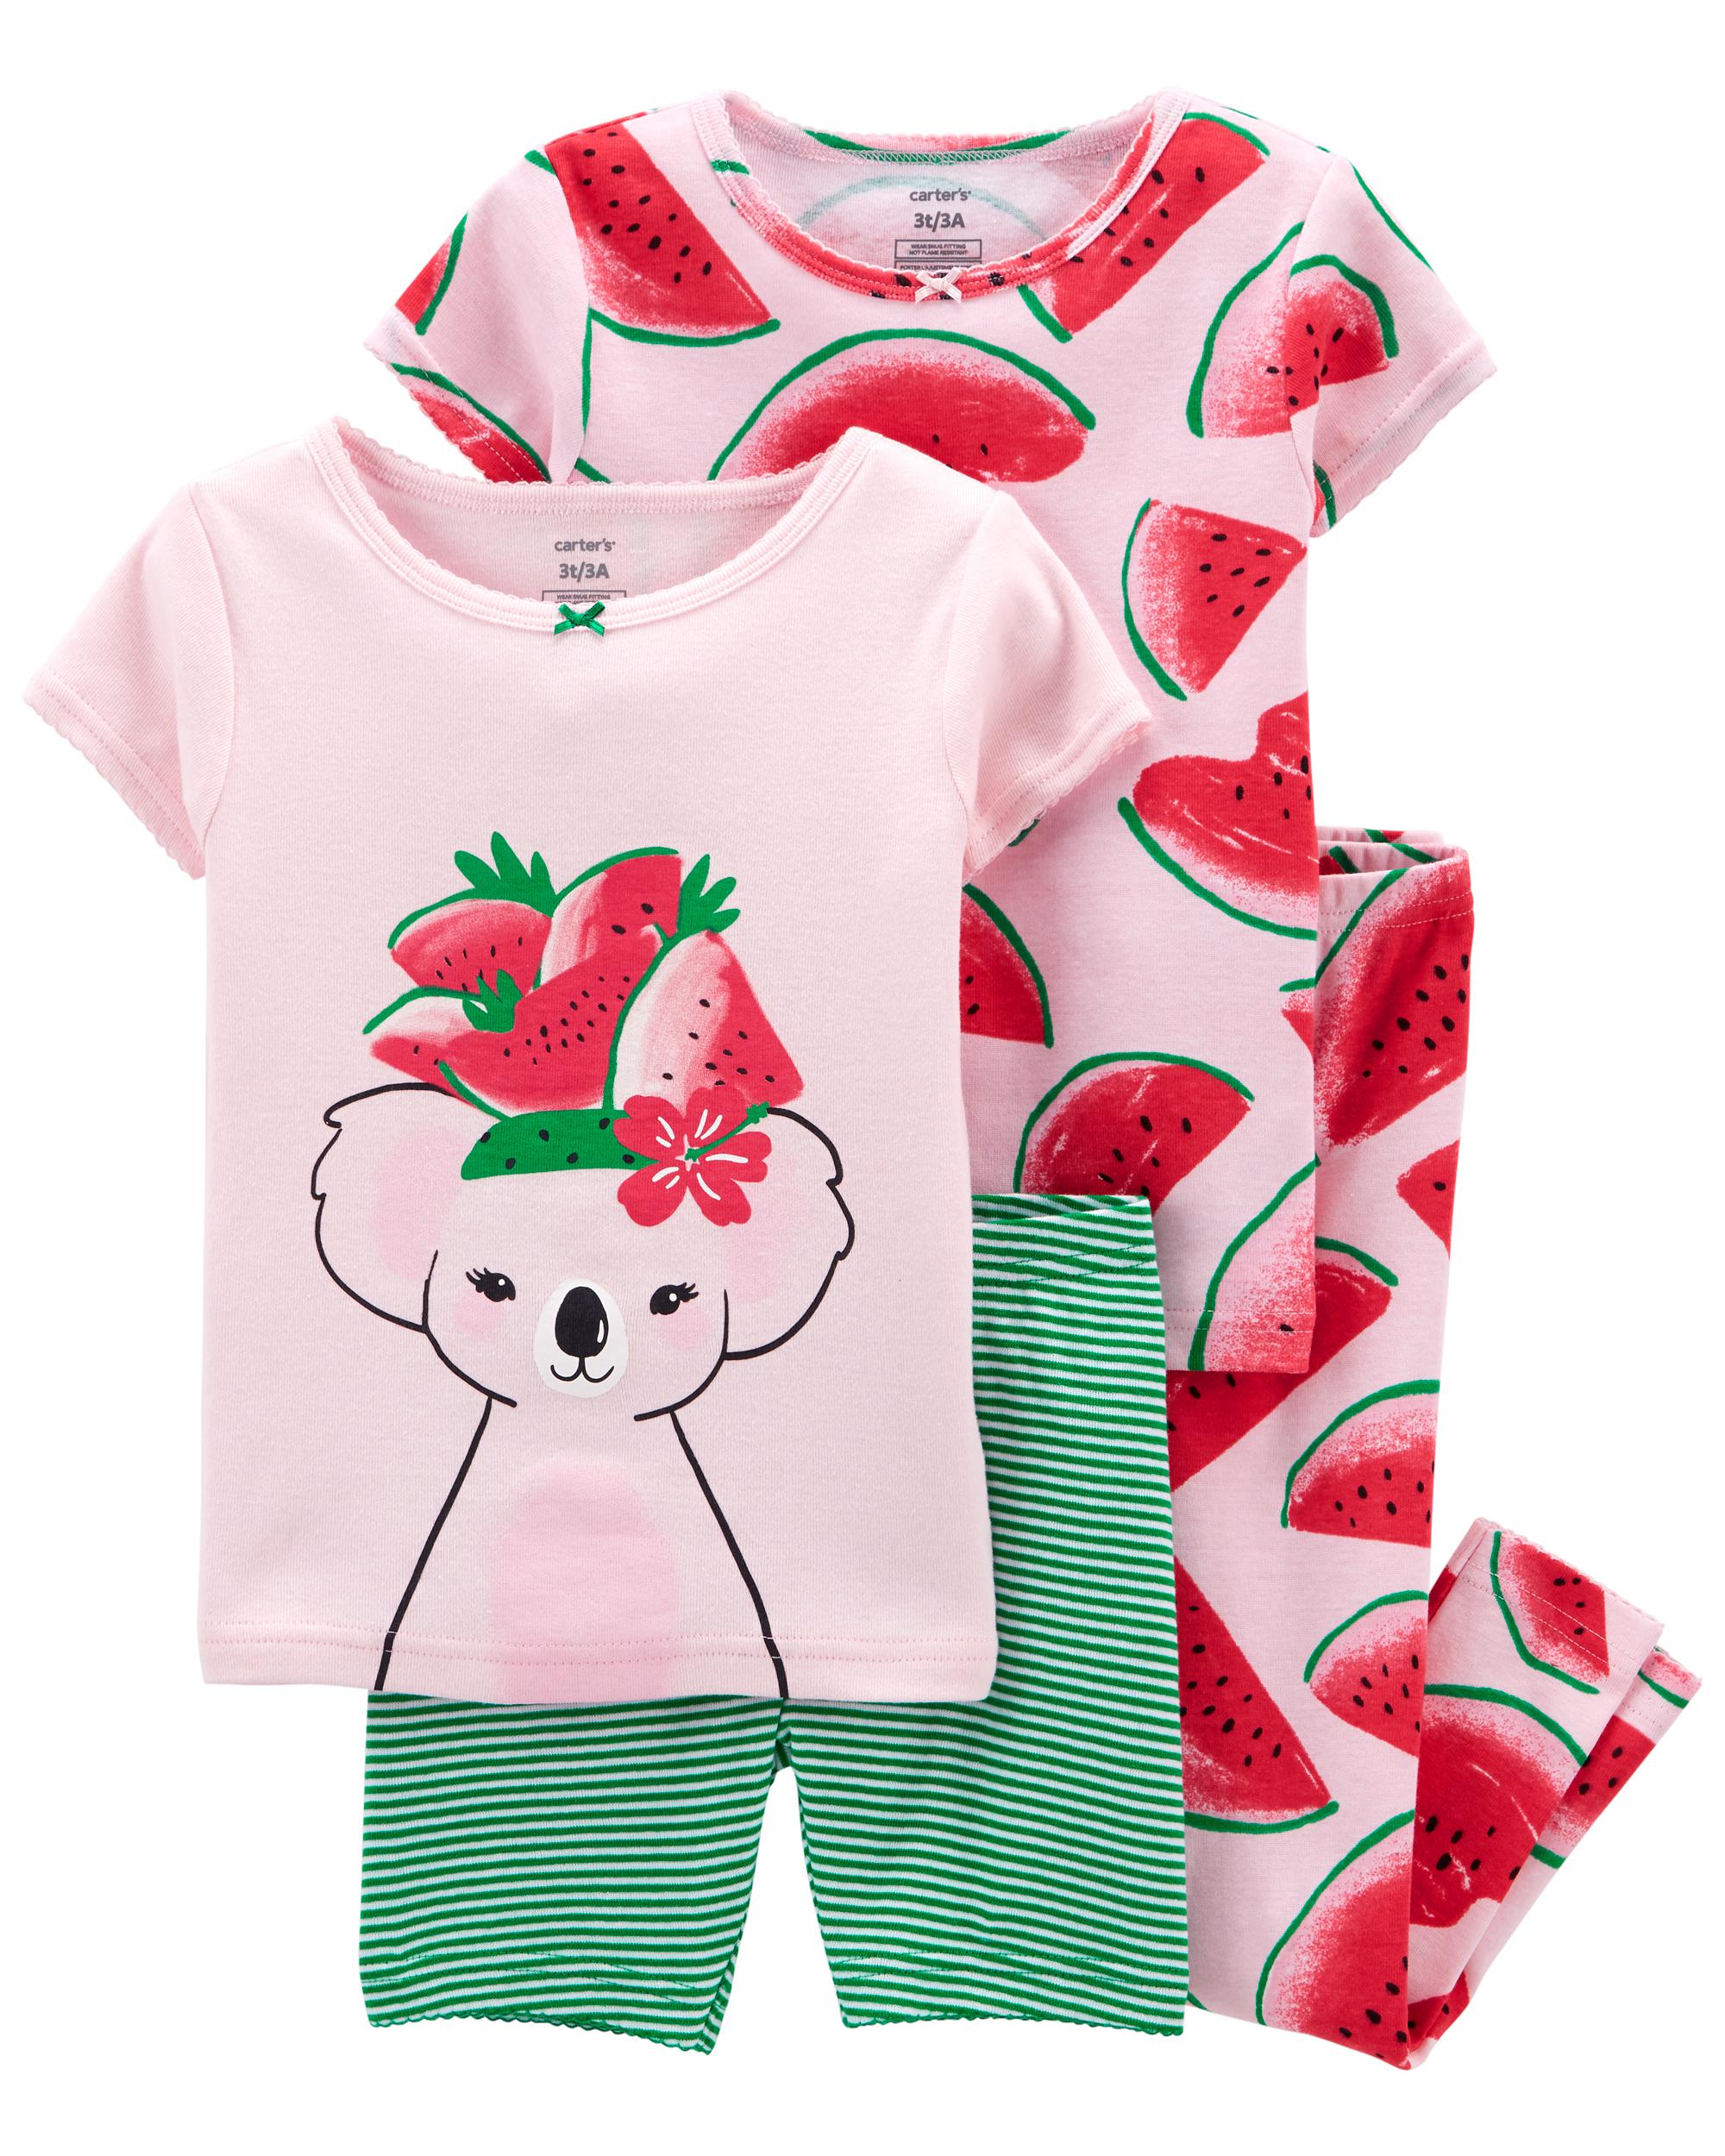 Carter's Kids' Pajamas: 4-Piece Baby Girls' Snug Fit Cotton PJs $8.80, Toddler Girls' Snug Fit PJs $9.60, More + Free Shipping on $35+